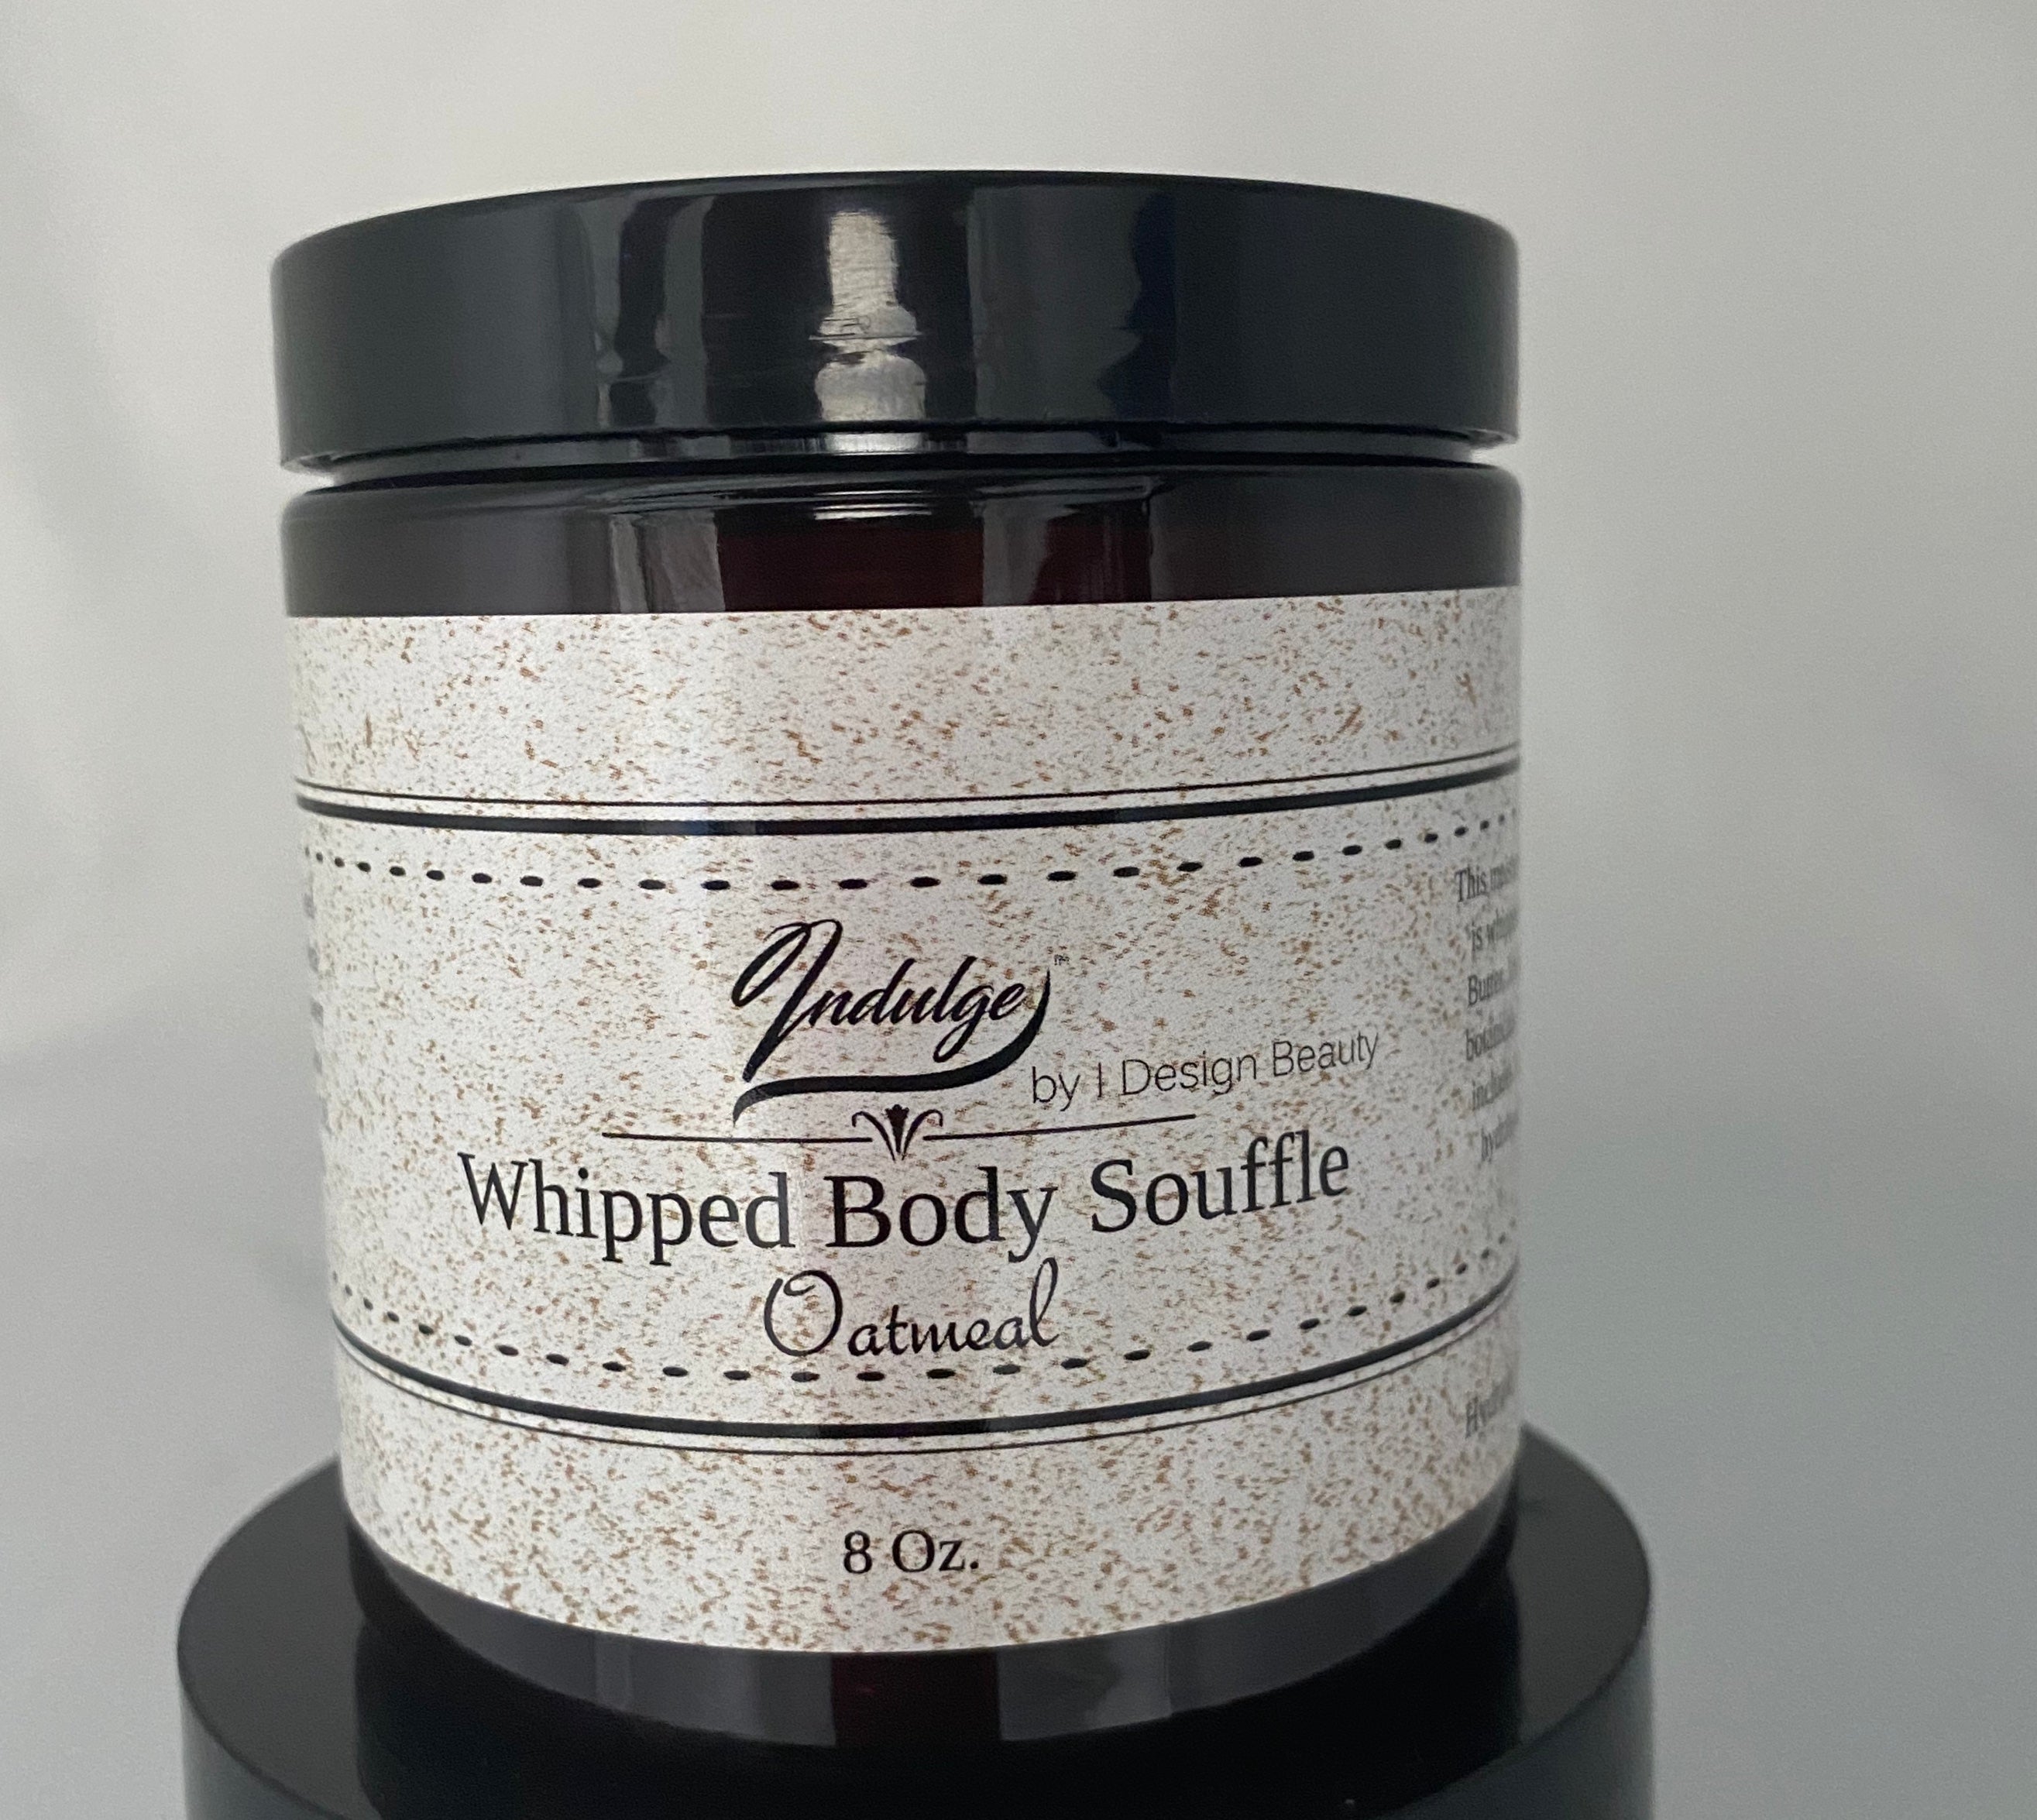 Whipped Body Soufflé